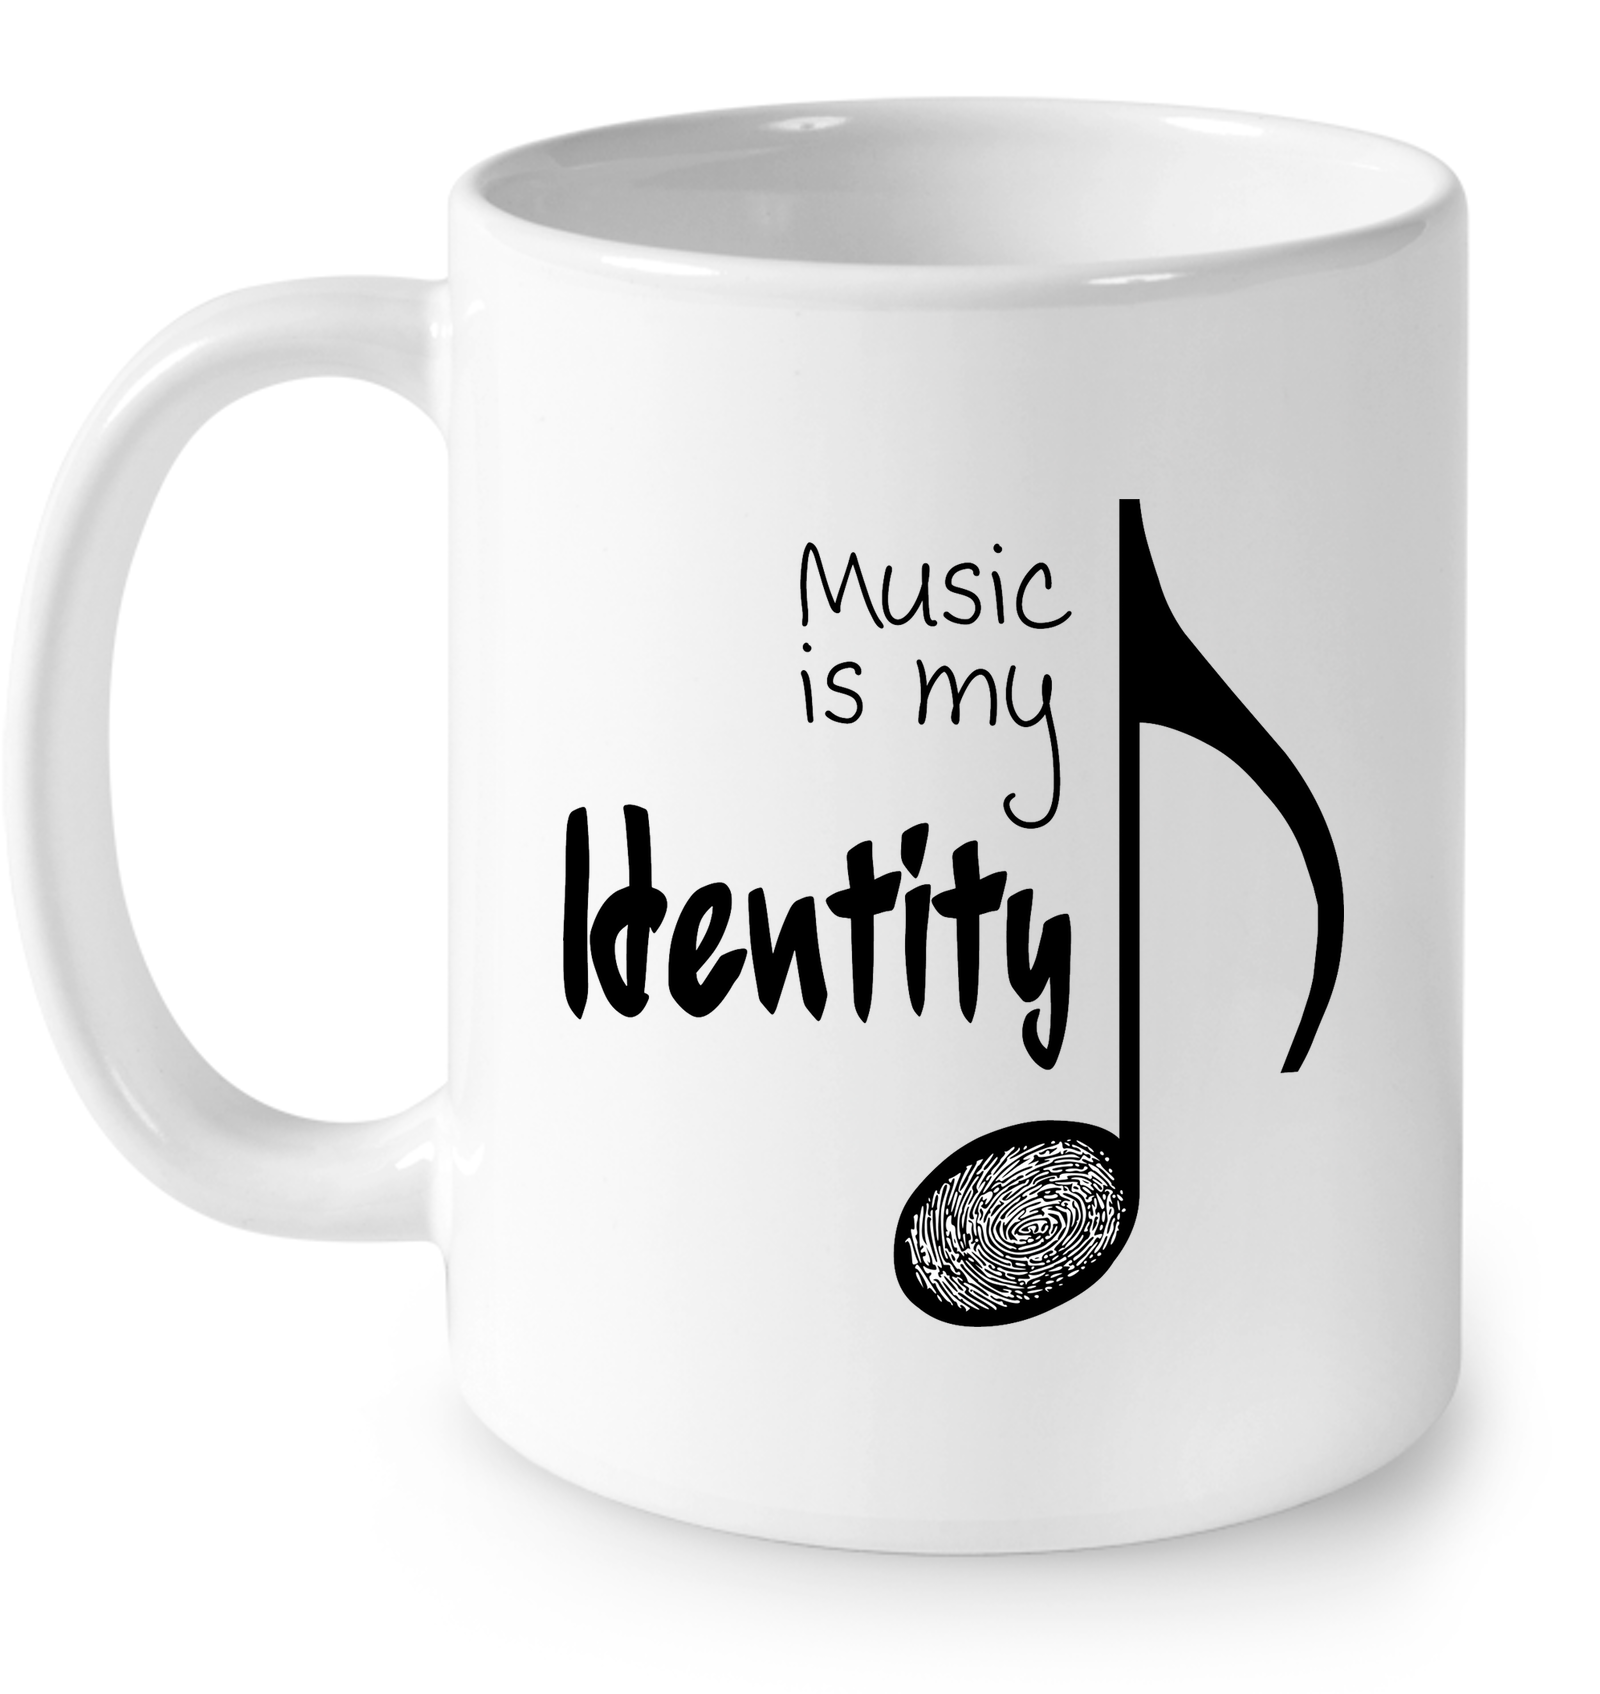 Music is my Identity - Ceramic Mug